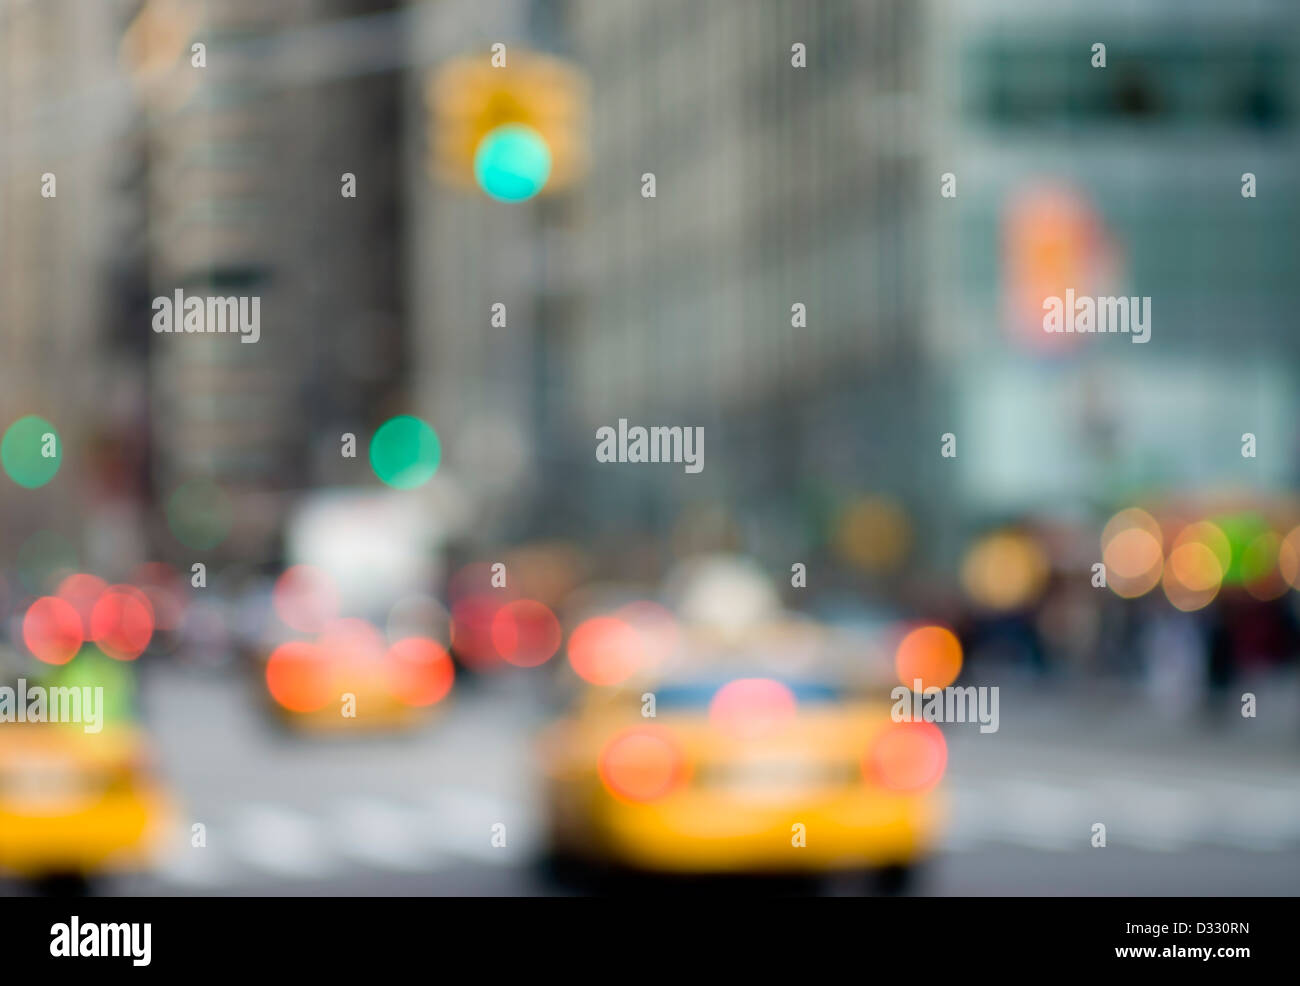 Abstract scena urbana con traffico e taxi, New York City. Foto Stock